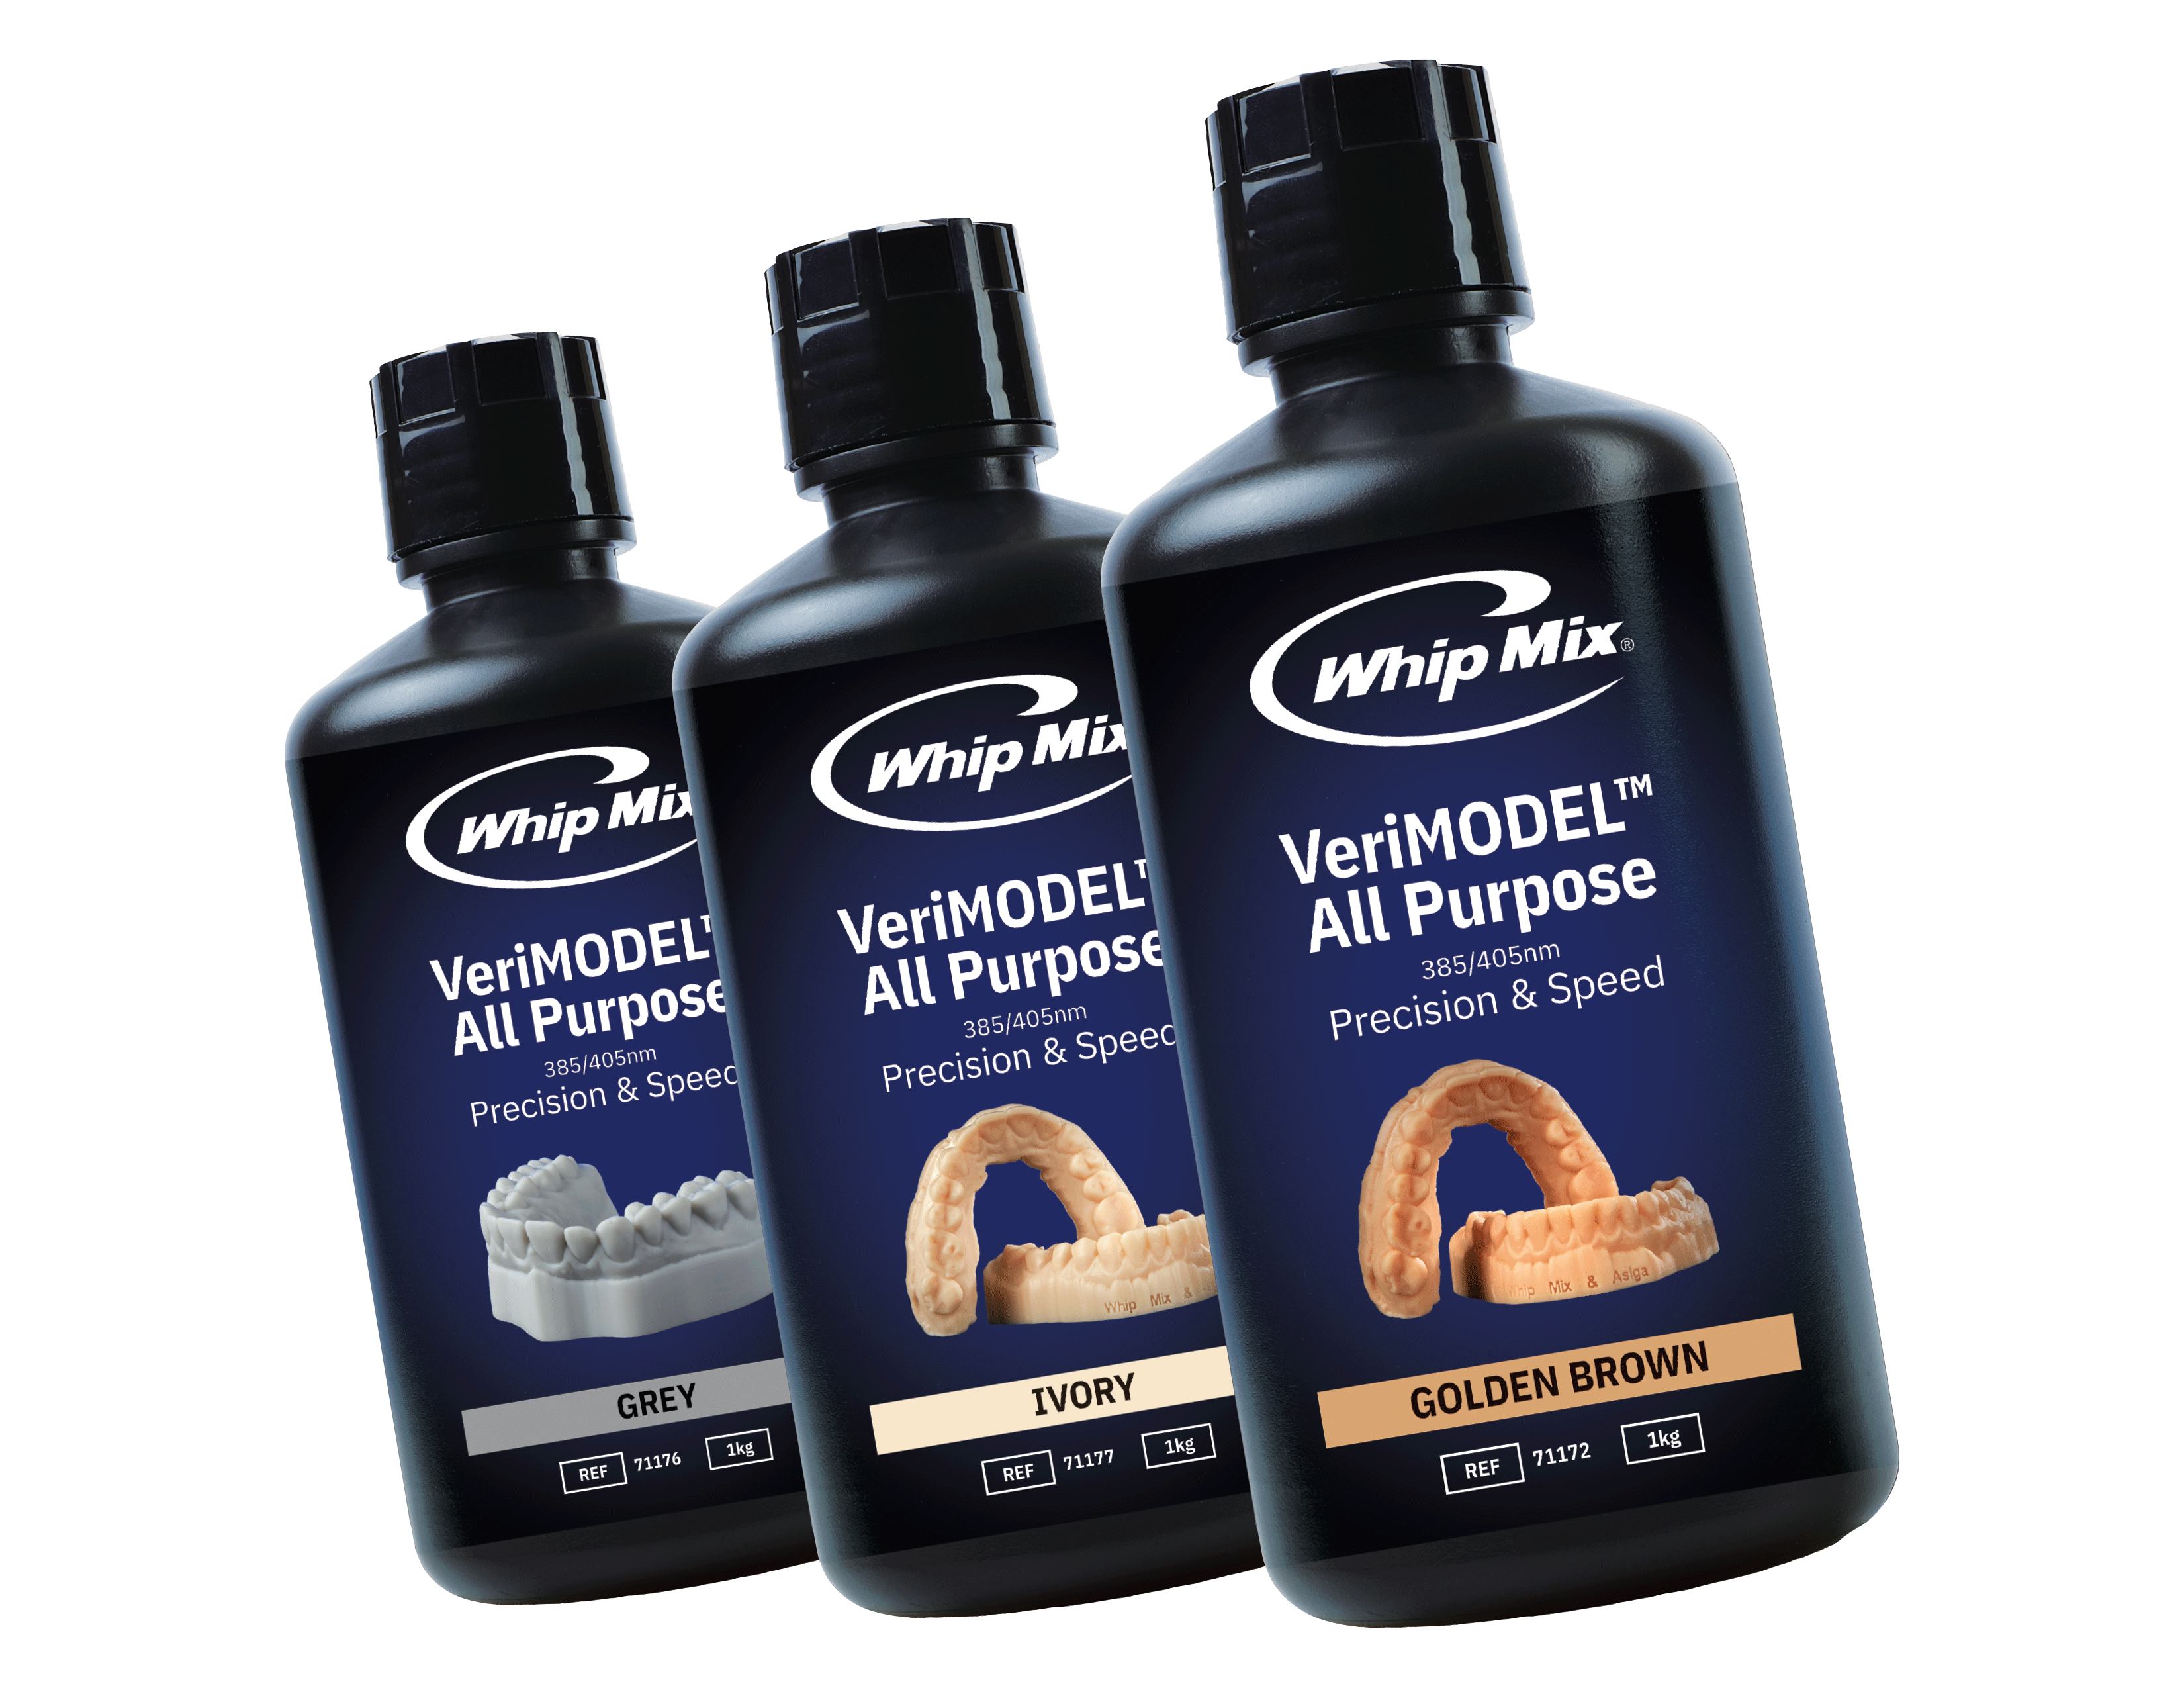 Verimodel all purpose three colors in individual bottles